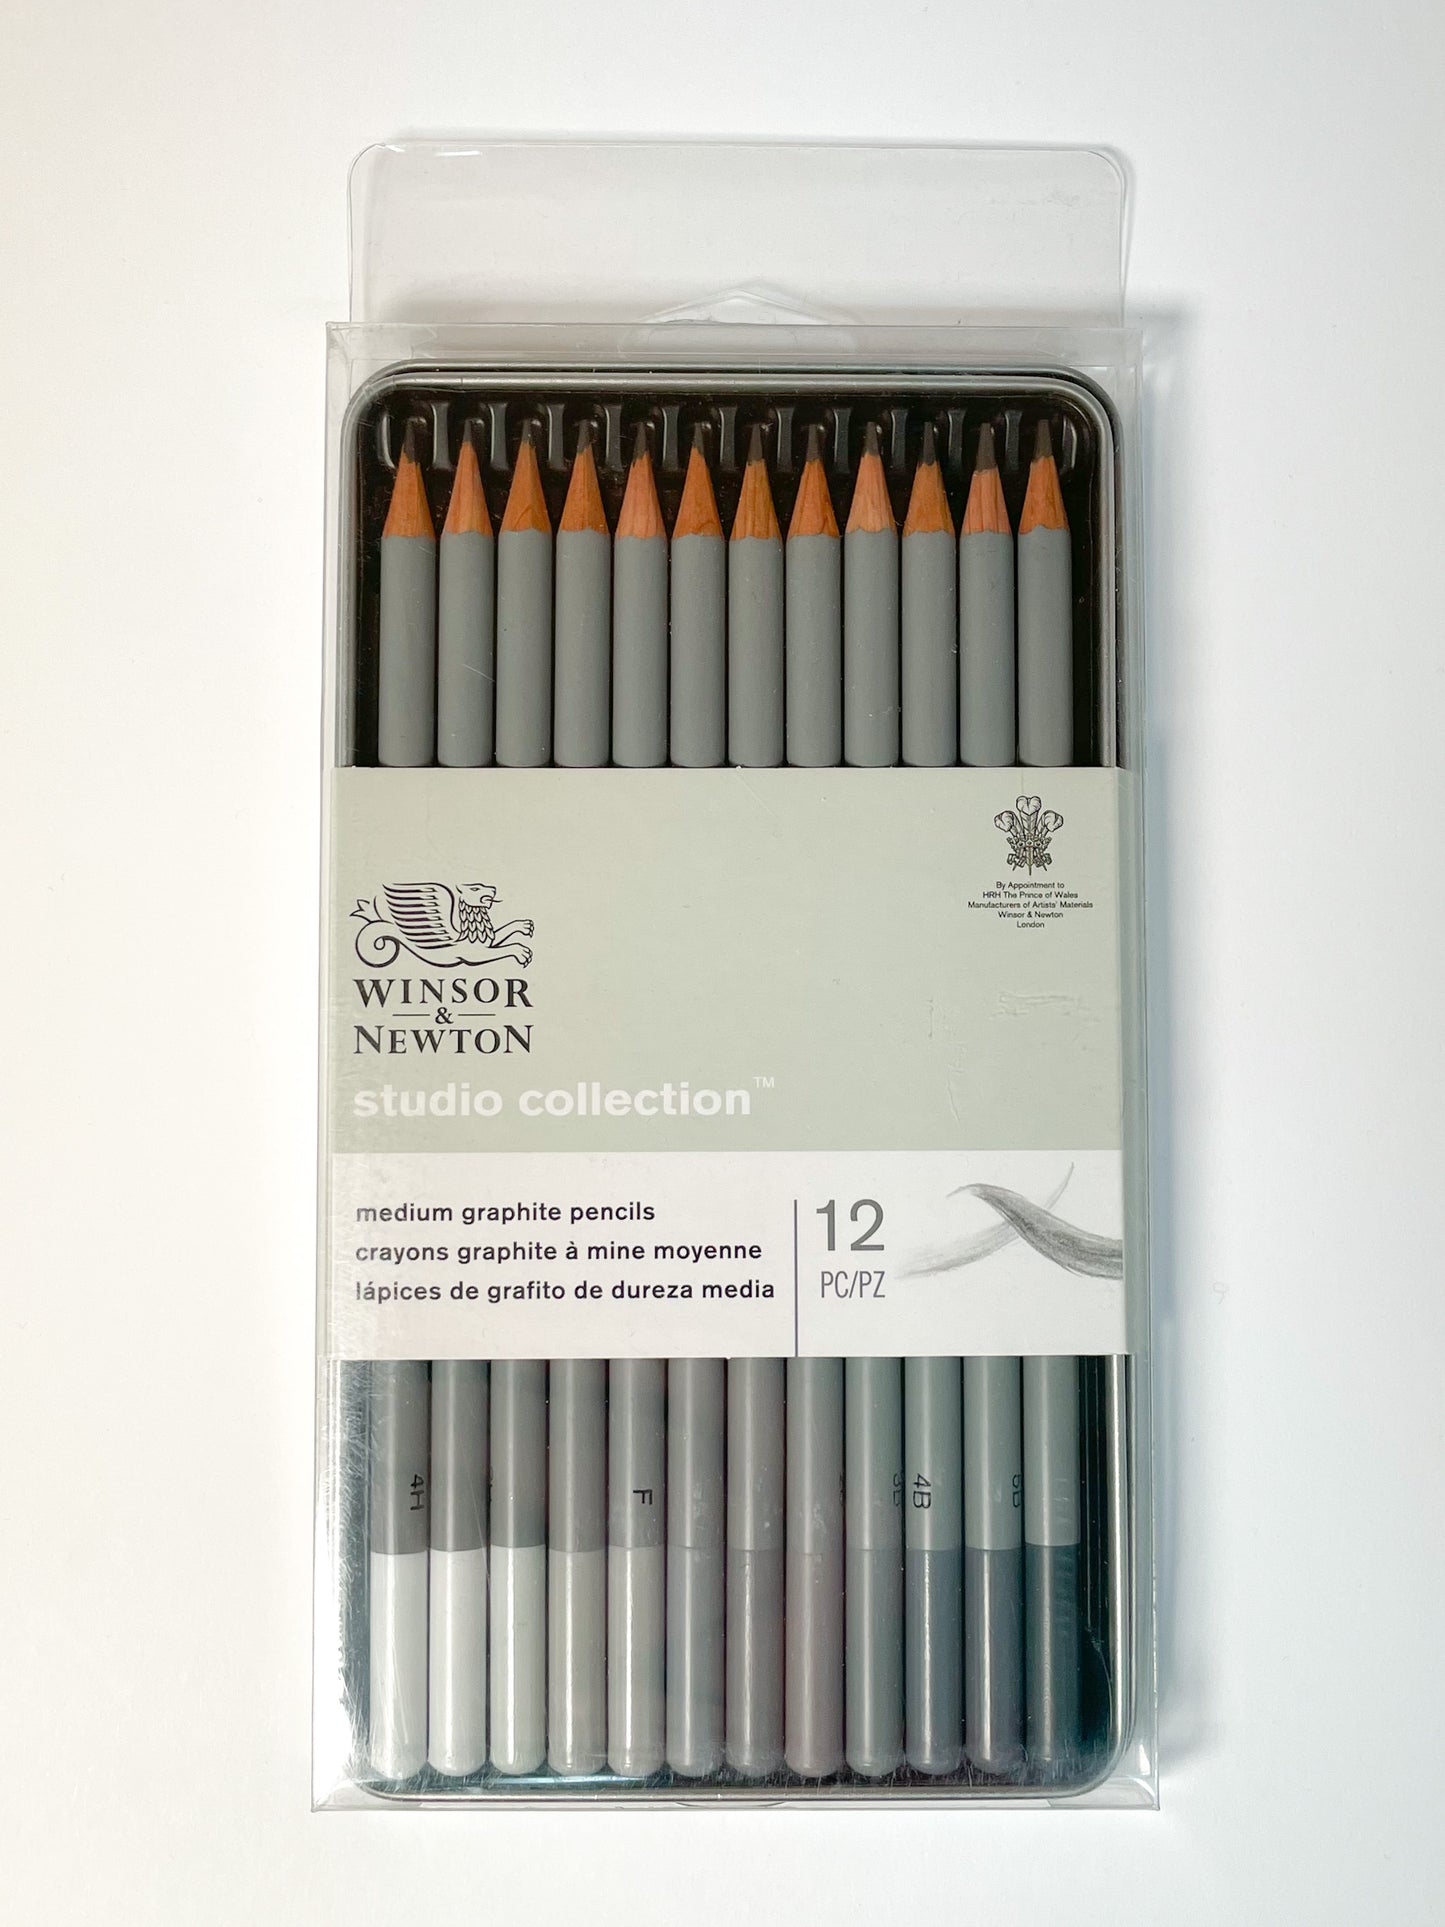 Winsor & Newton Studio Collection Medium Graphite Pencils